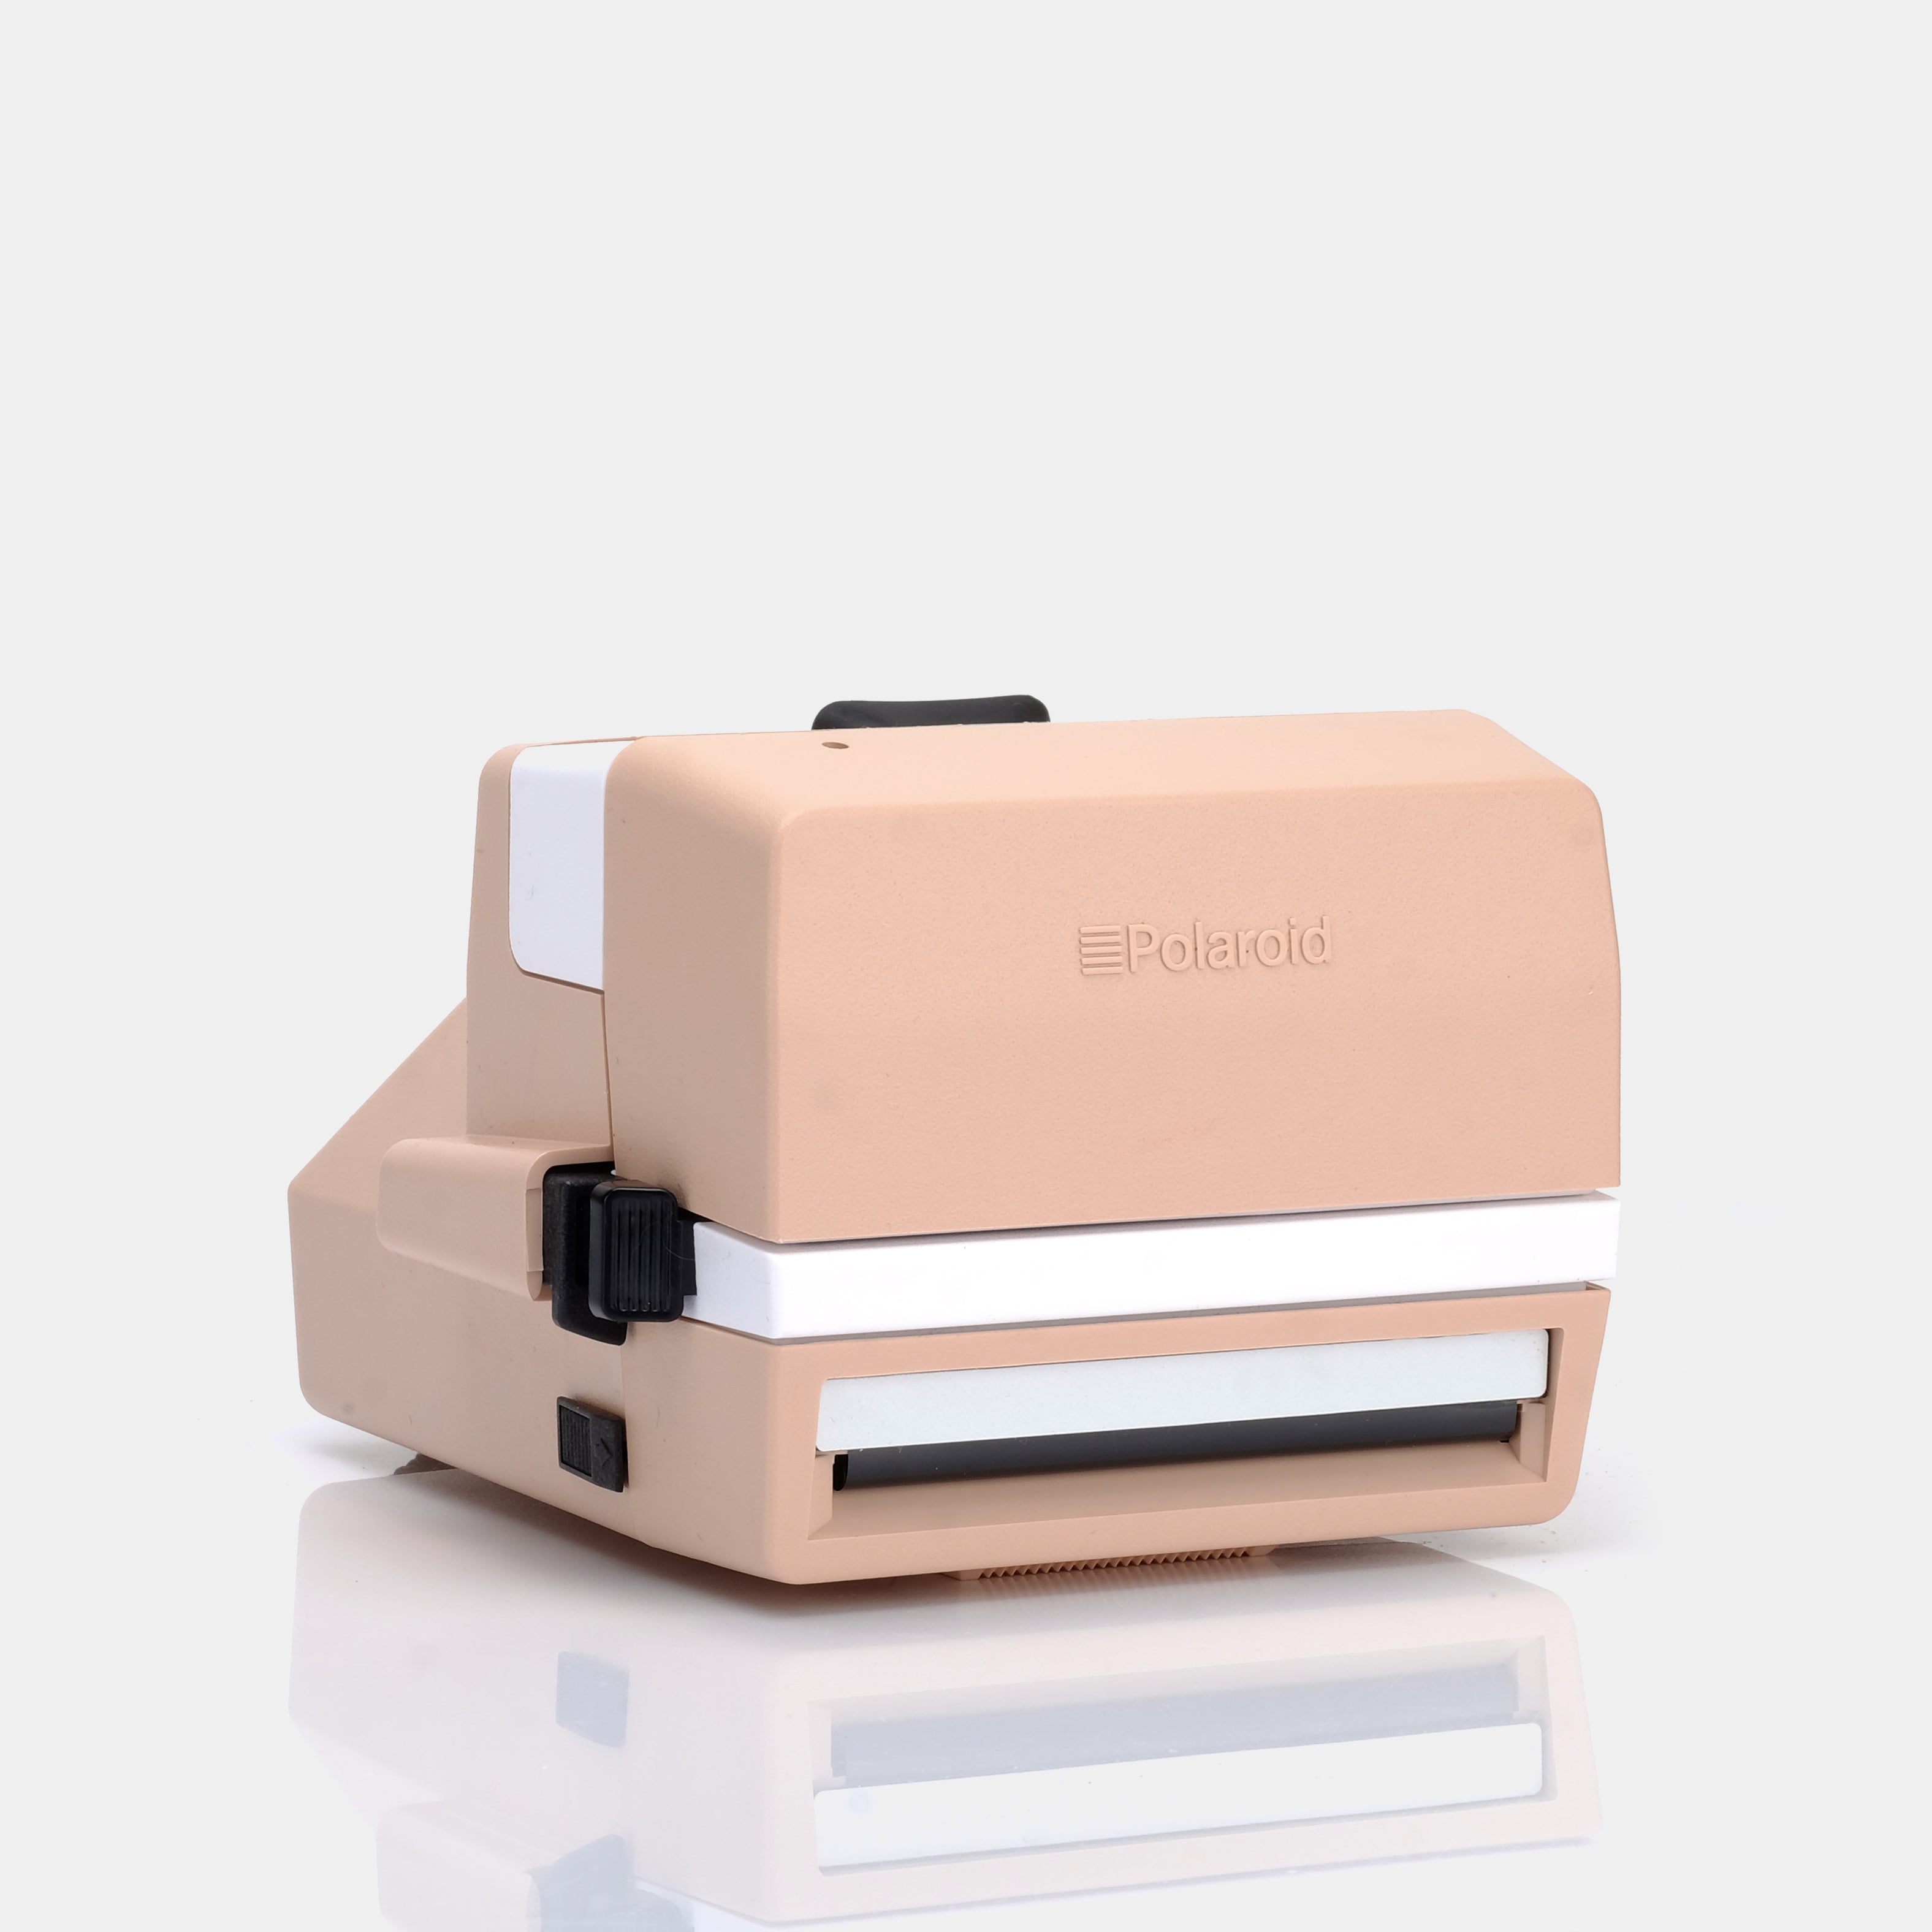 Polaroid 600 Two-Toned Blush Instant Film Camera